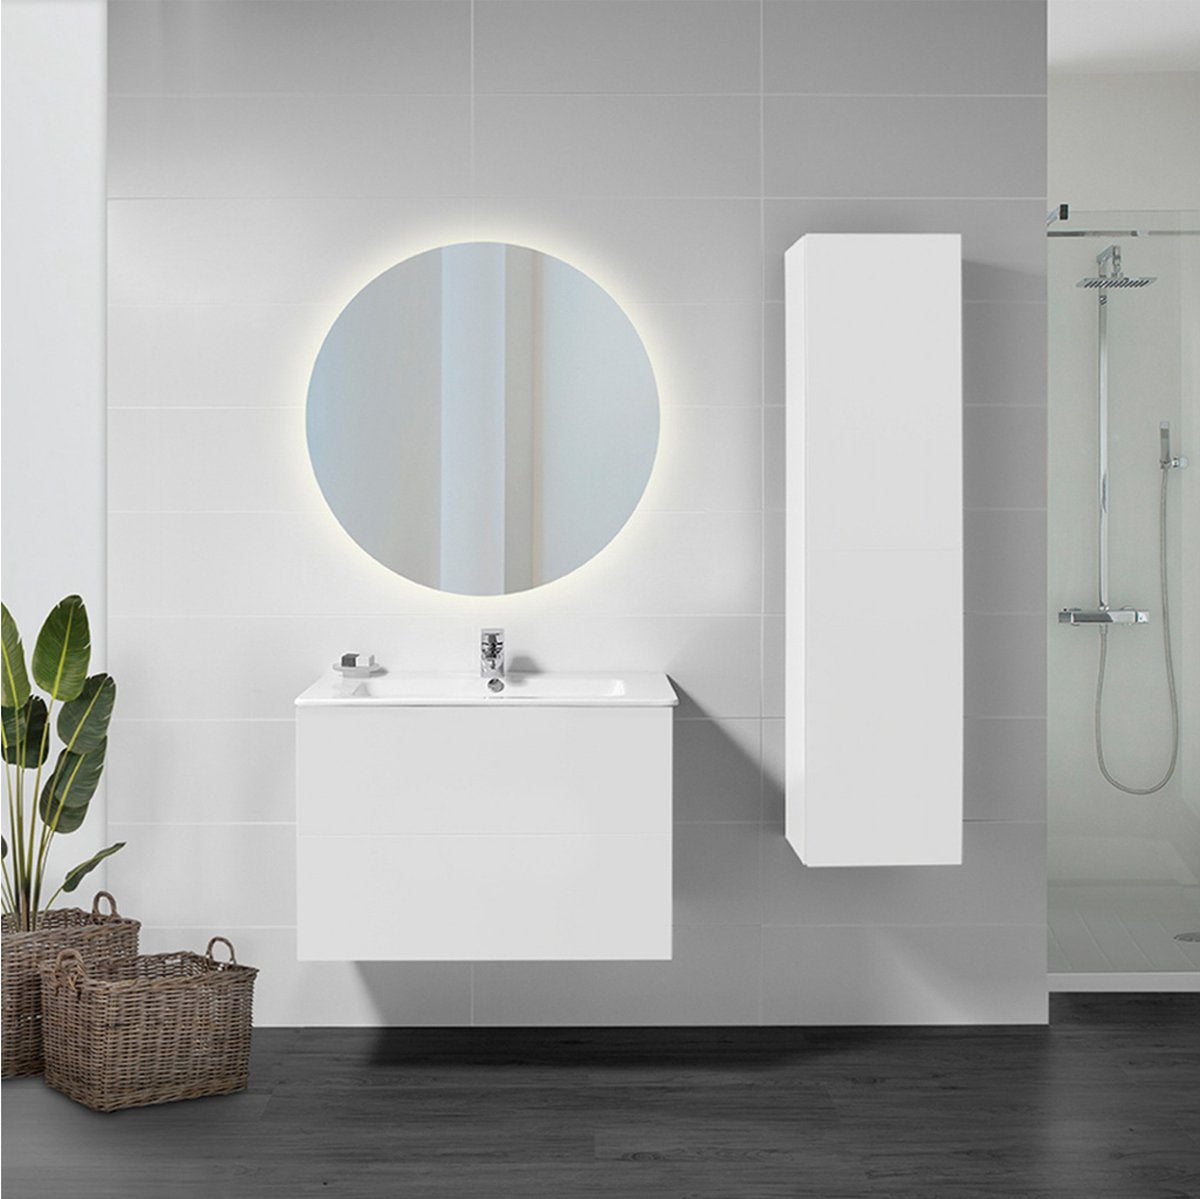 Eleganca Round condensation-free bathroom mirror Ø60cm with LED lighting